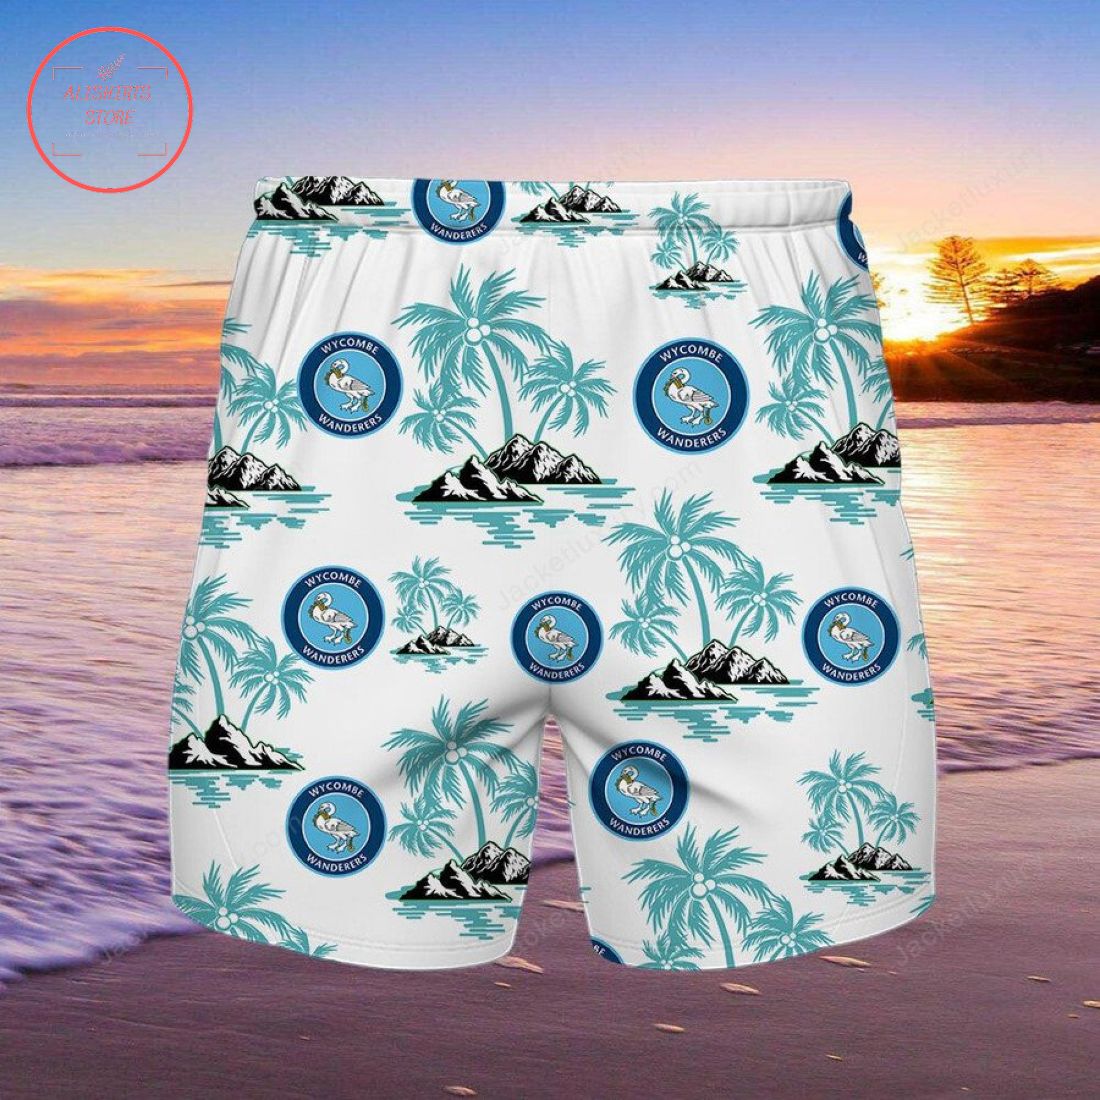 Wycombe Wanderers FC Hawaiian Shirt and Beach Shorts